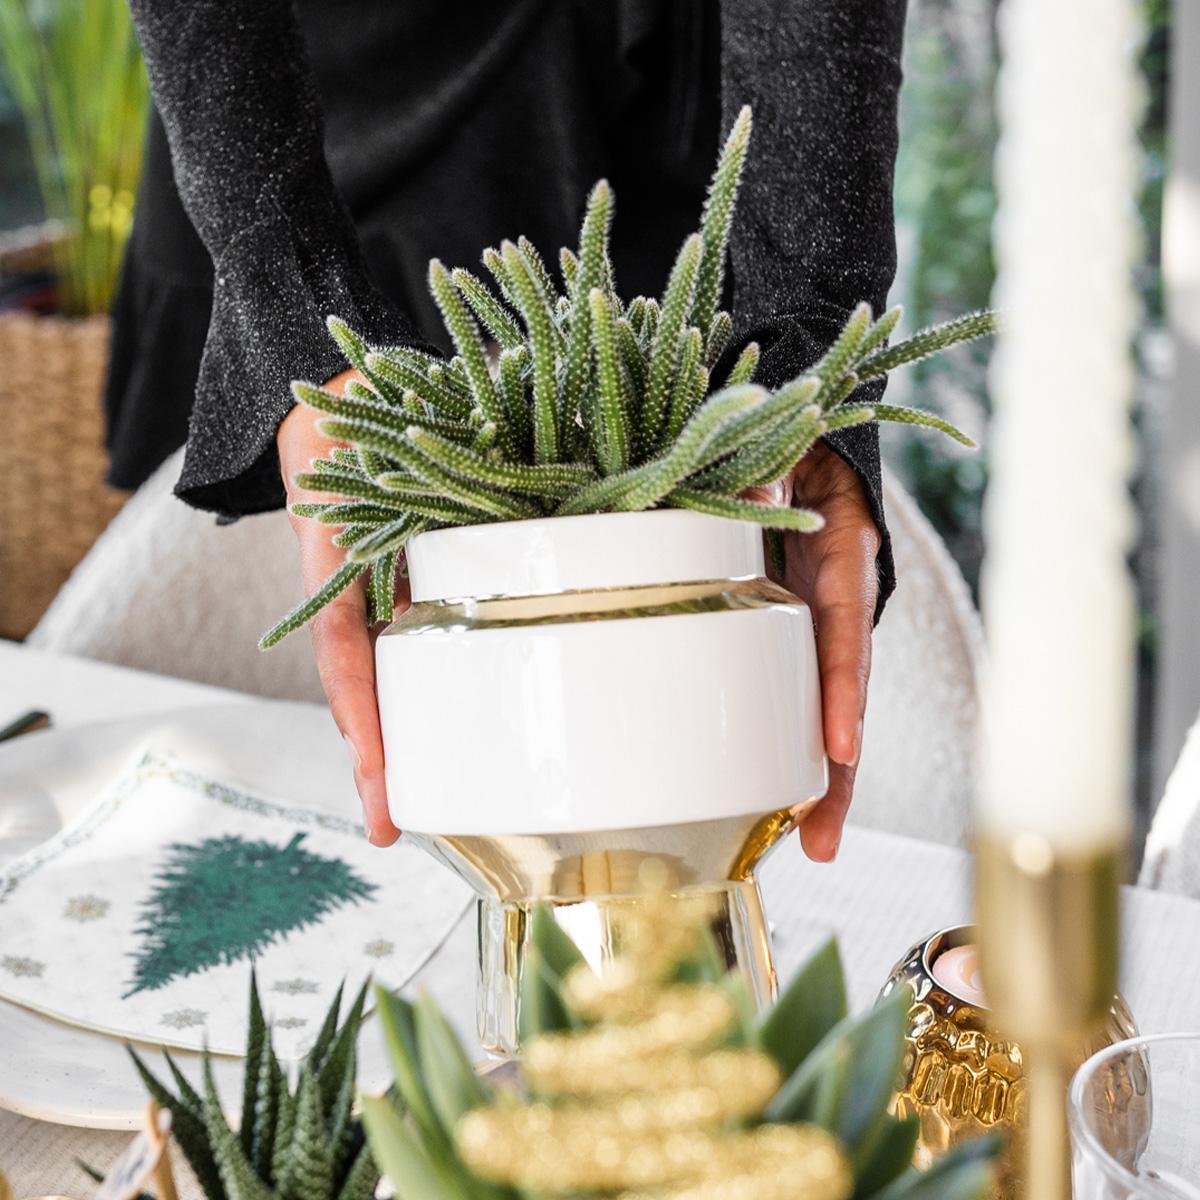 Kolibri Company | Gift set Luxury Living| Plantenset met witte Phalaenopsis Orchidee en Succulenten incl. keramieken sierpotten